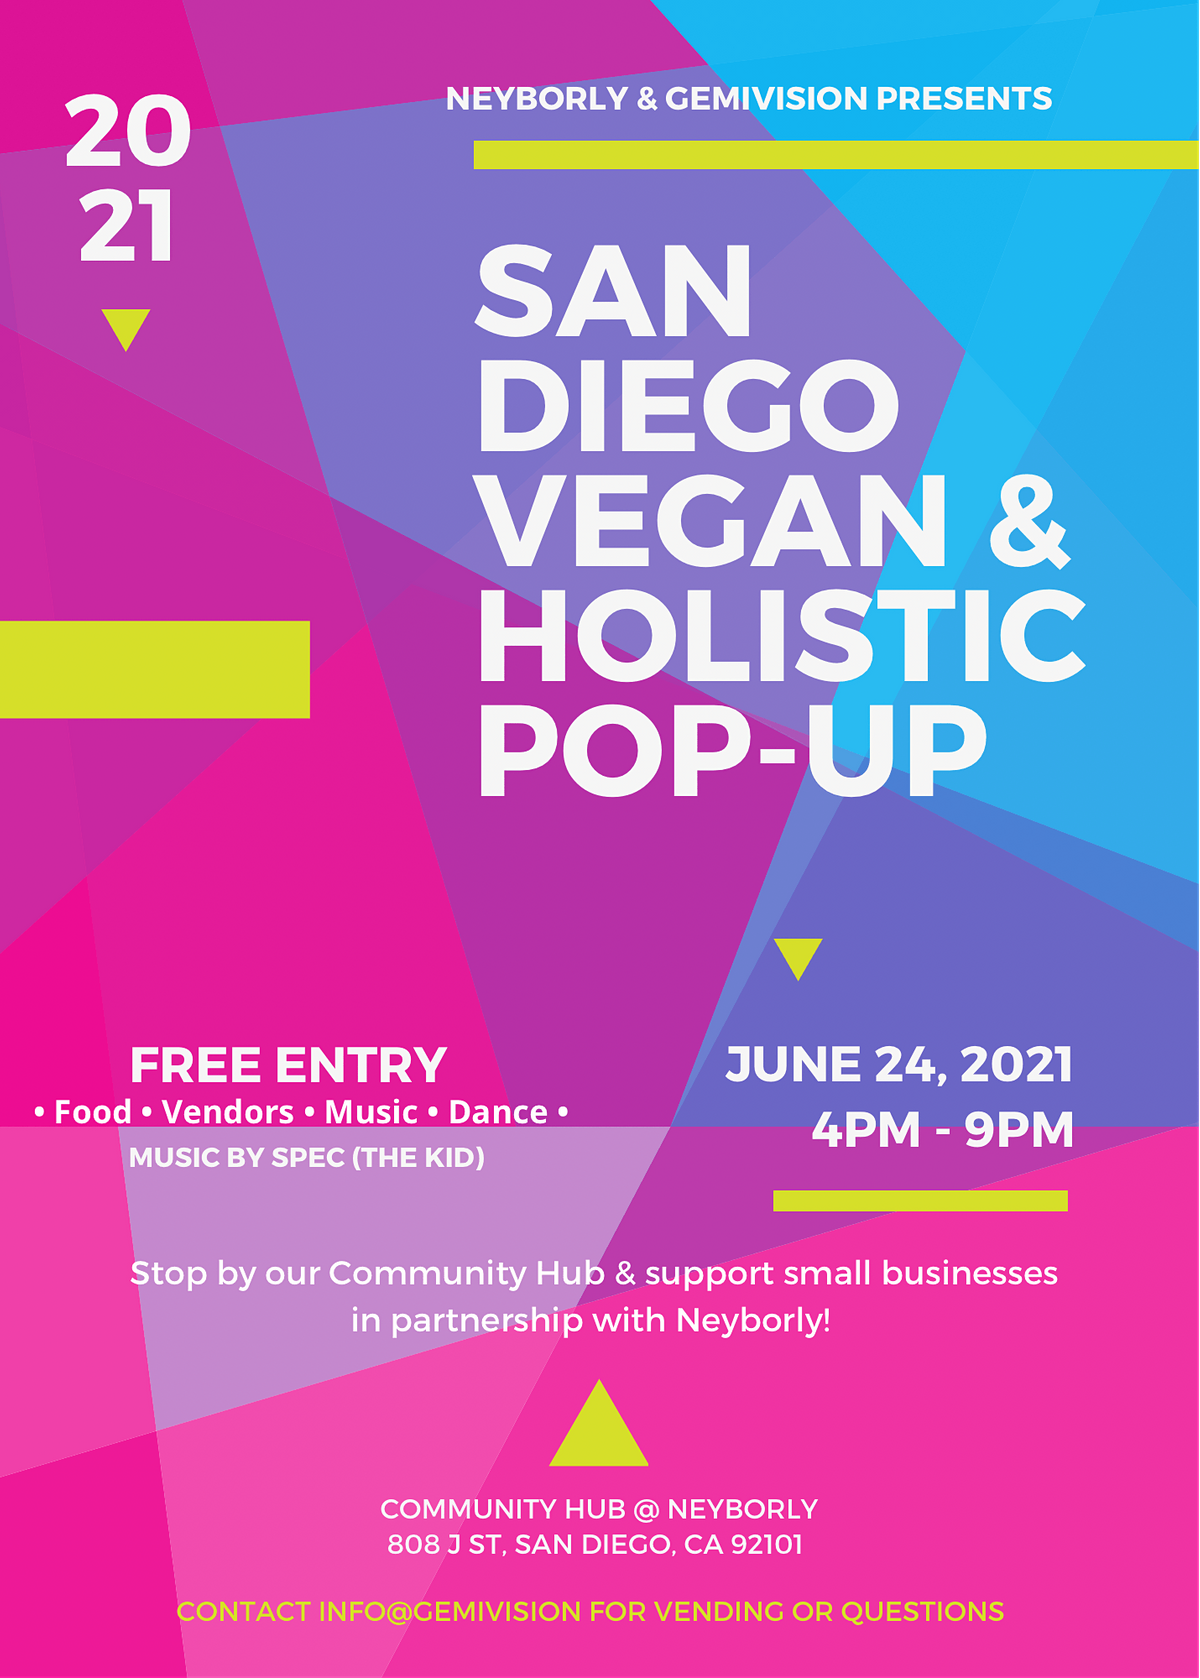 San Diego Vegan & Holistic Pop-Up